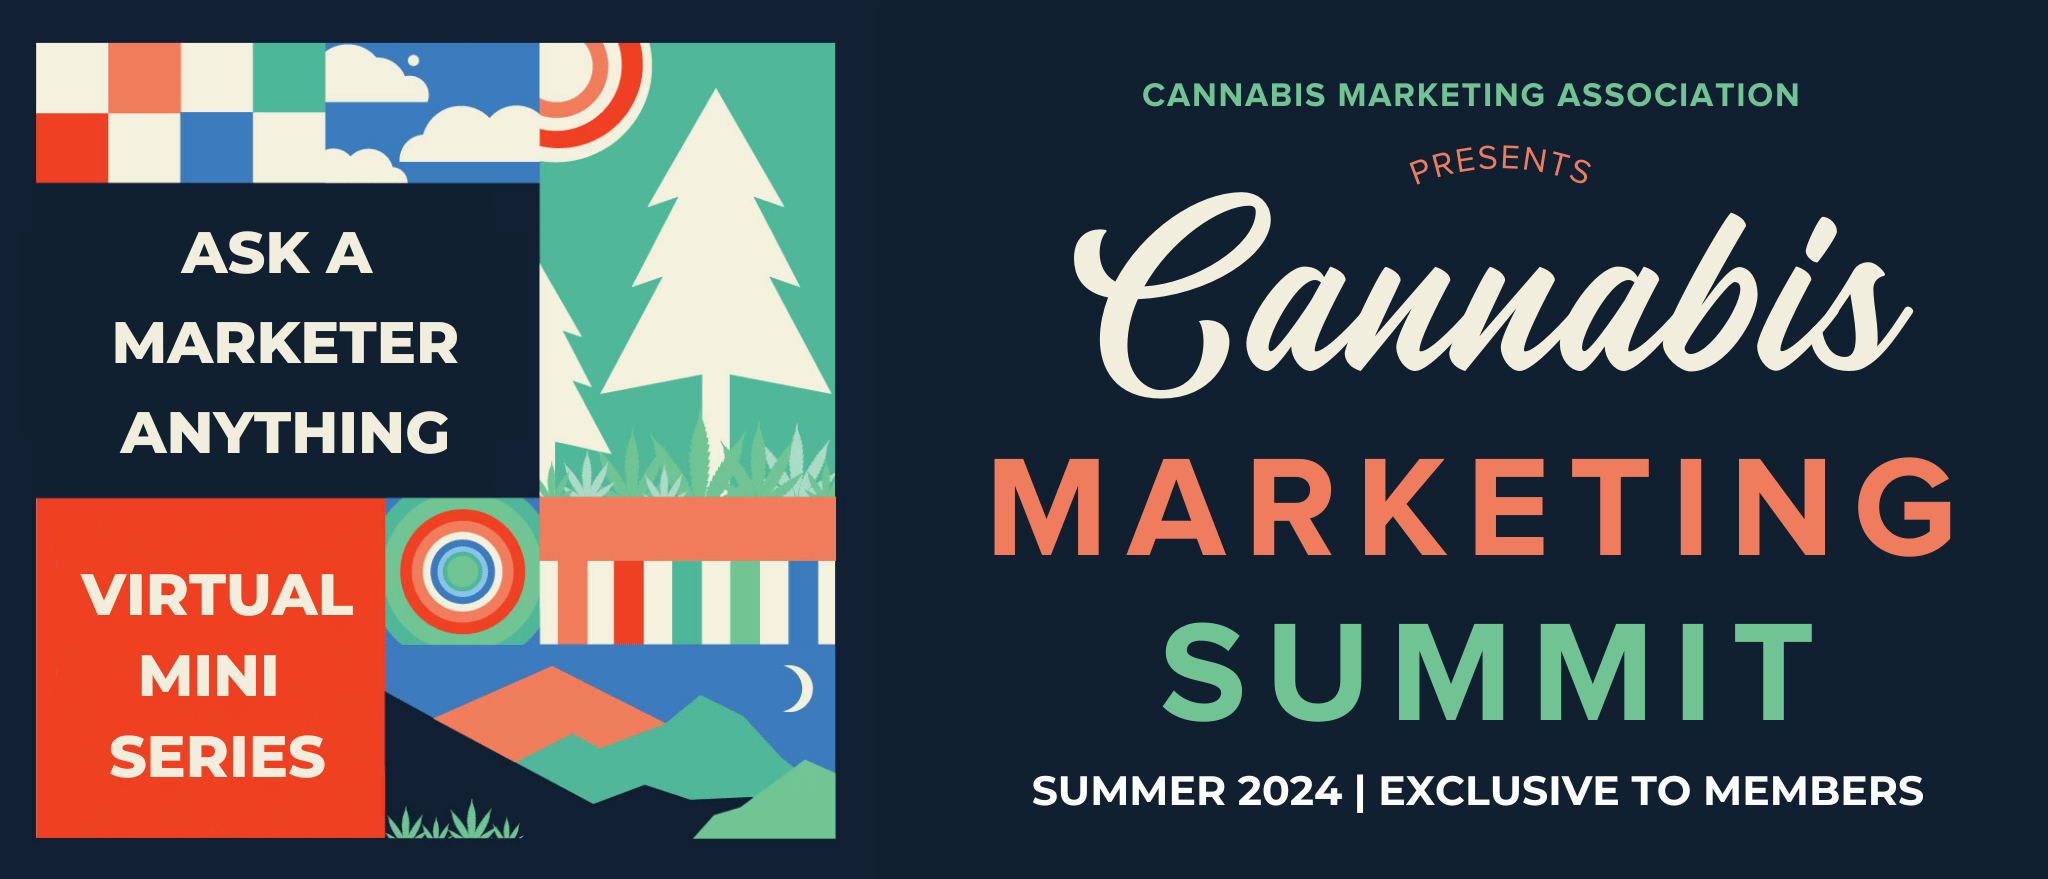 CMA Cannabis Marketing Summit 2023